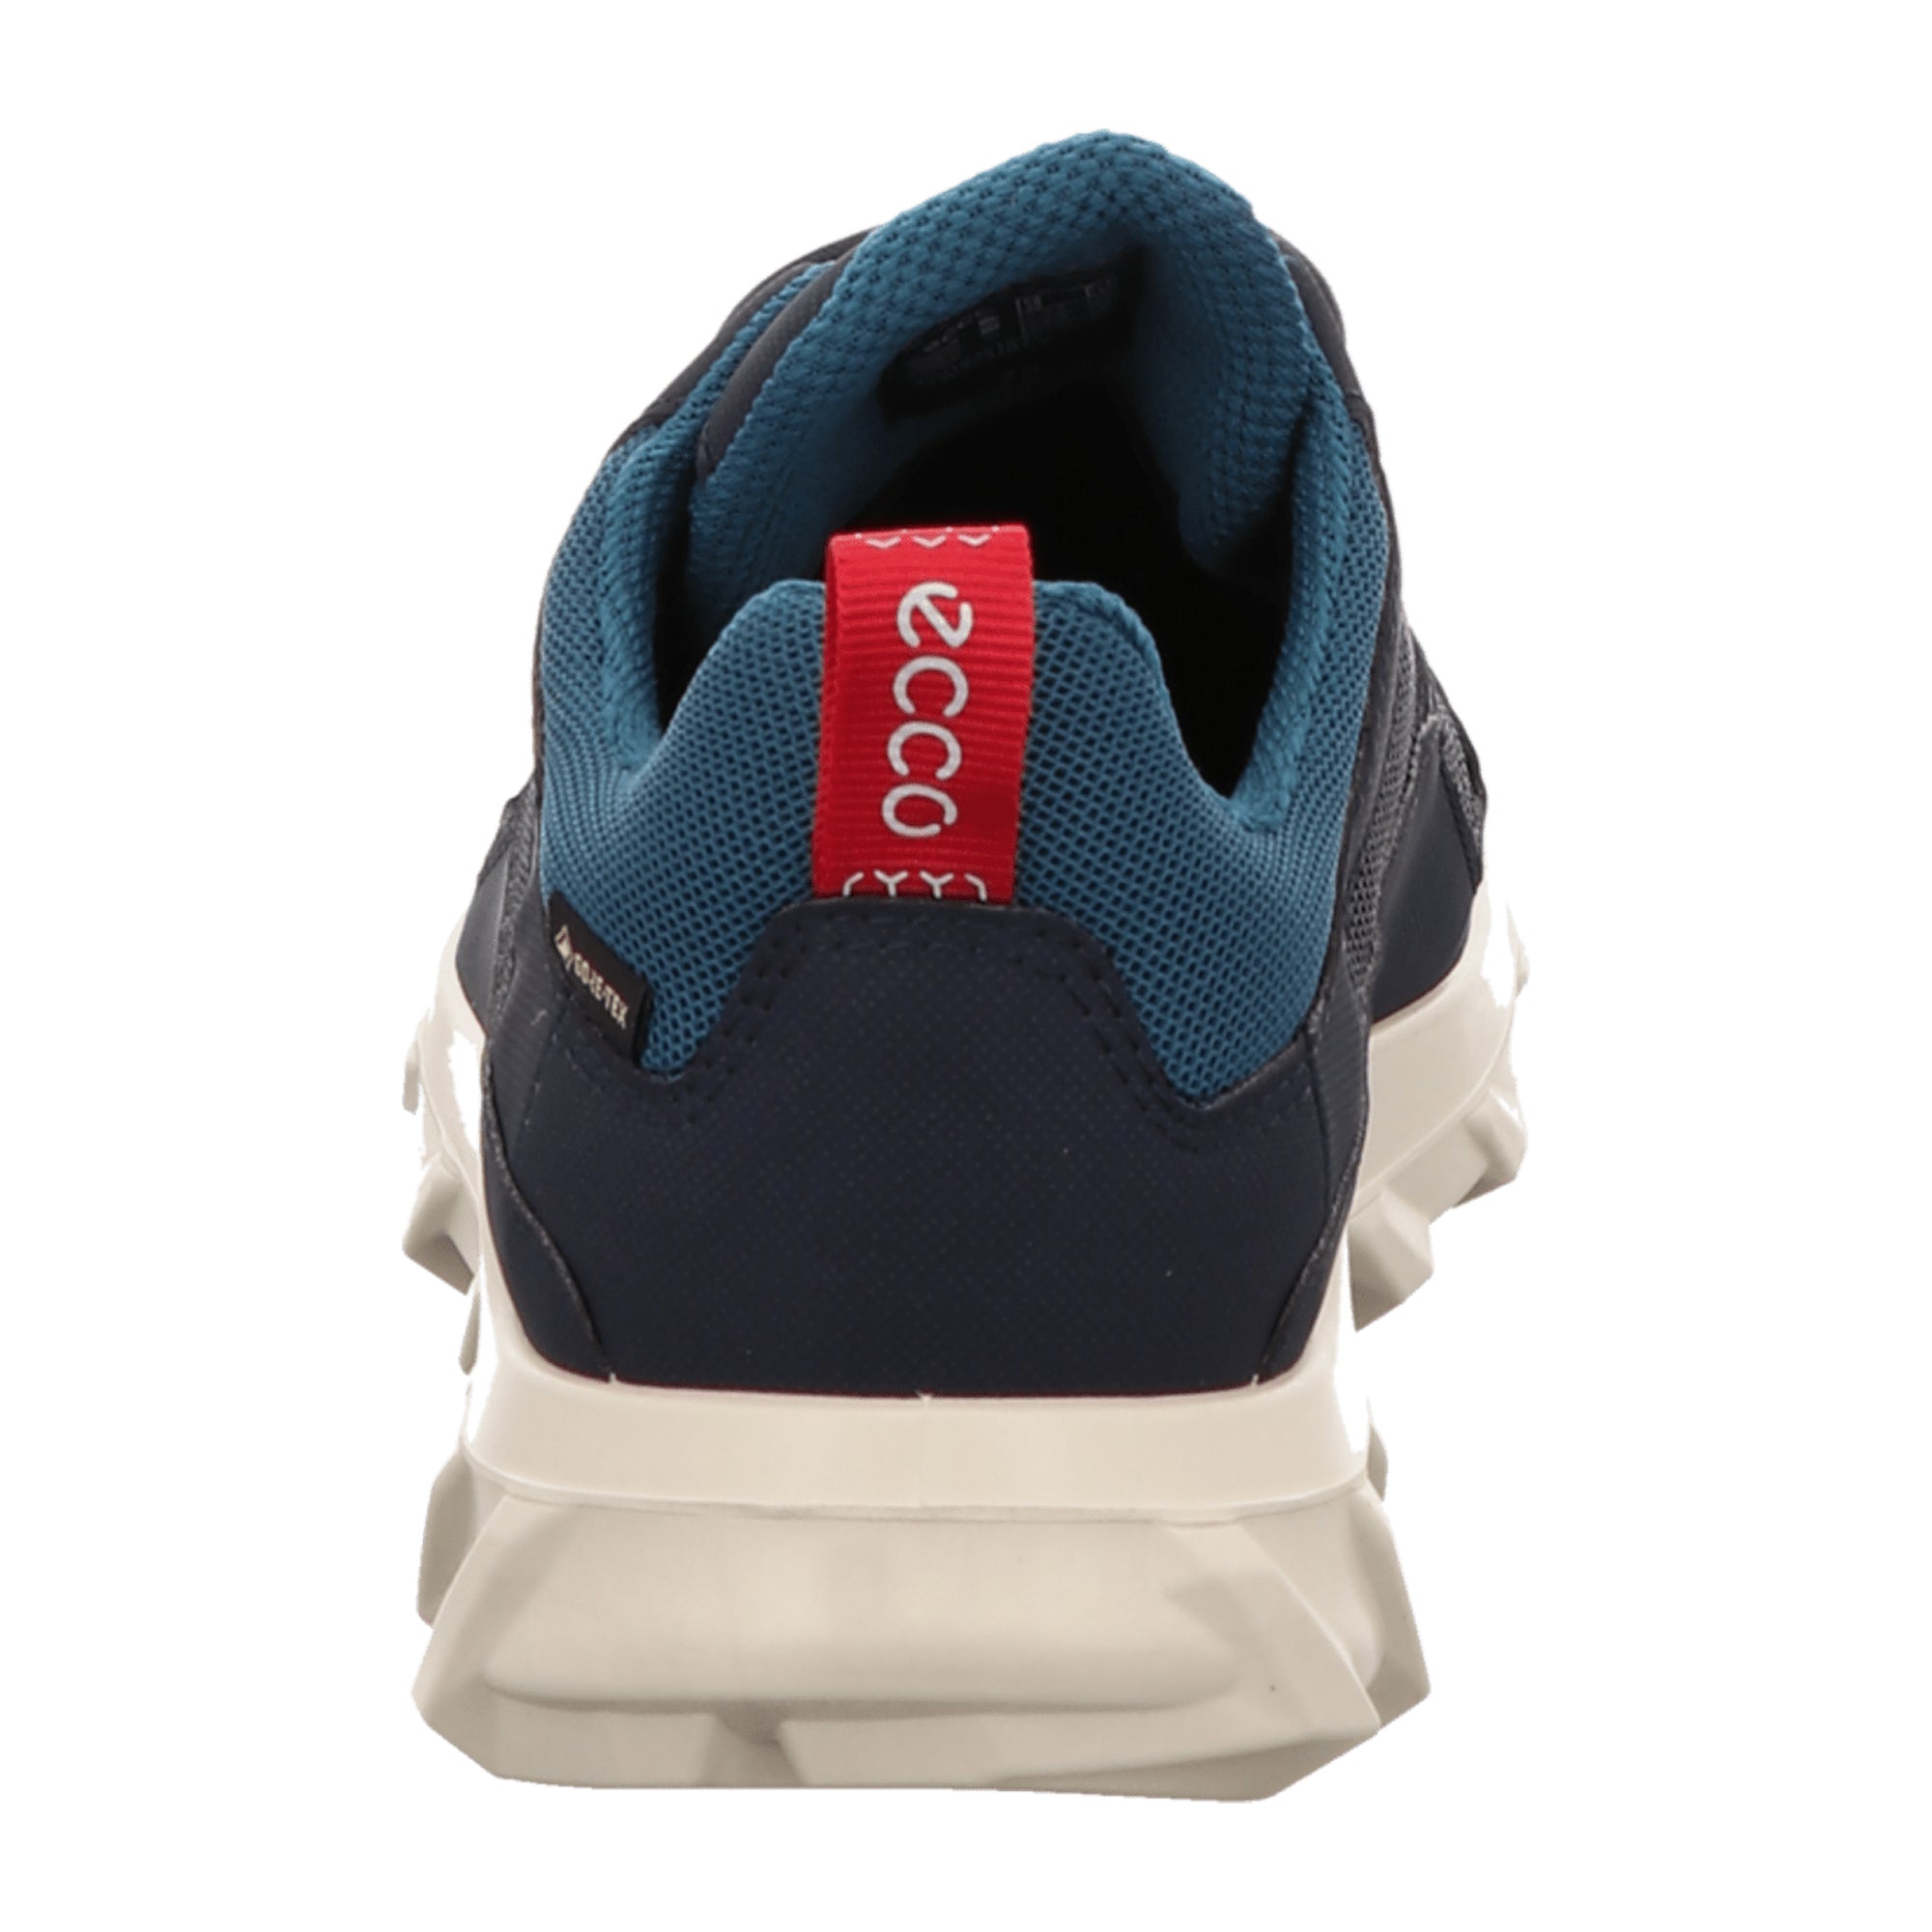 Ecco MX Women's Outdoor Shoes, Durable & Stylish, Blue